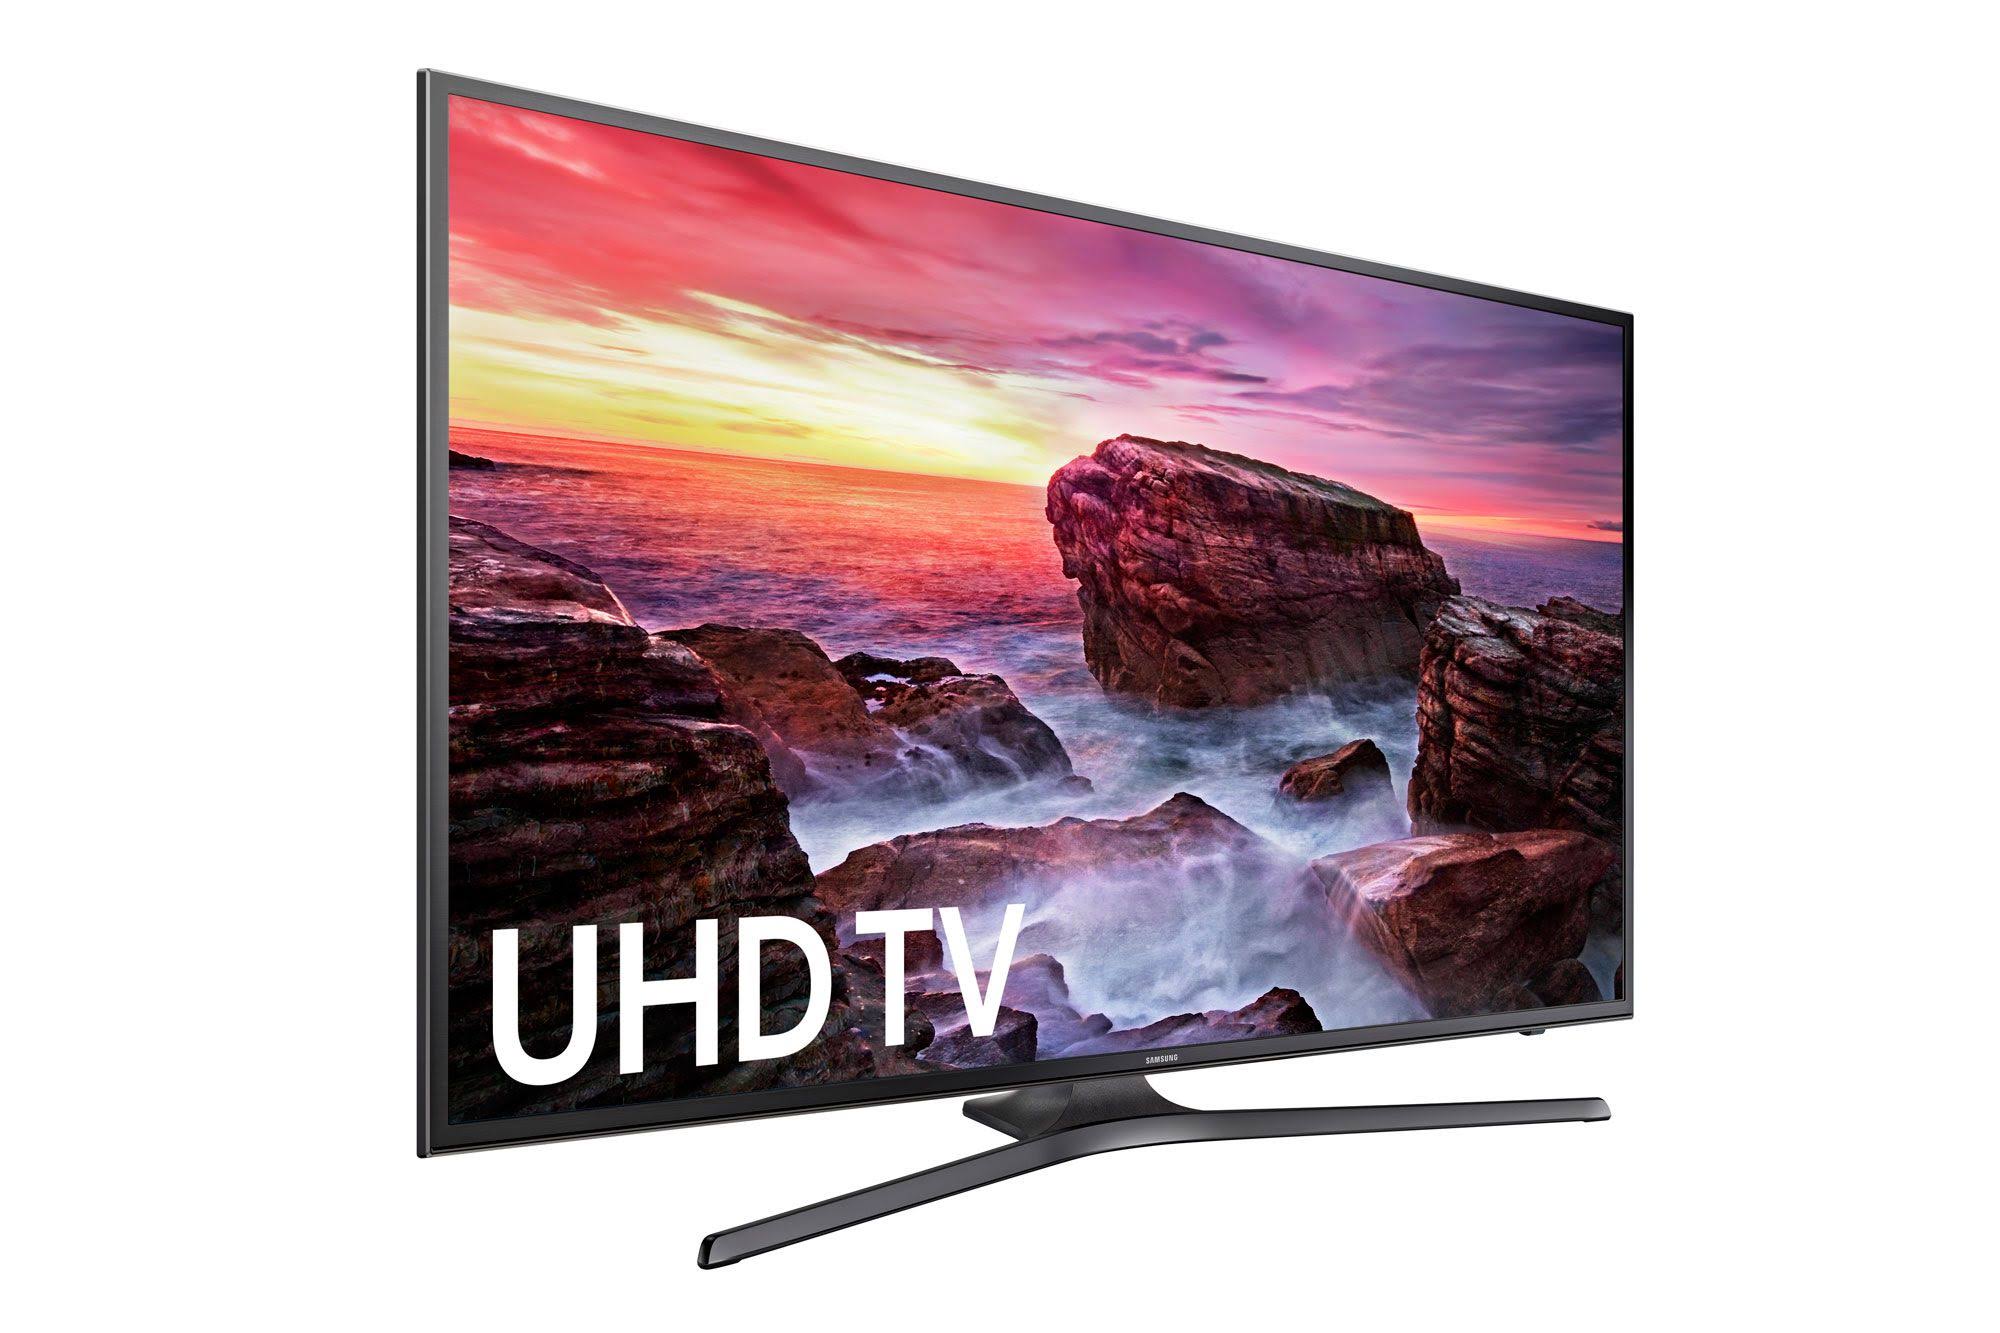 Samsung Электроника UN50MU6300 50-дюймовый 4K Ultra HD Smart LED TV (модель 2017 г.)